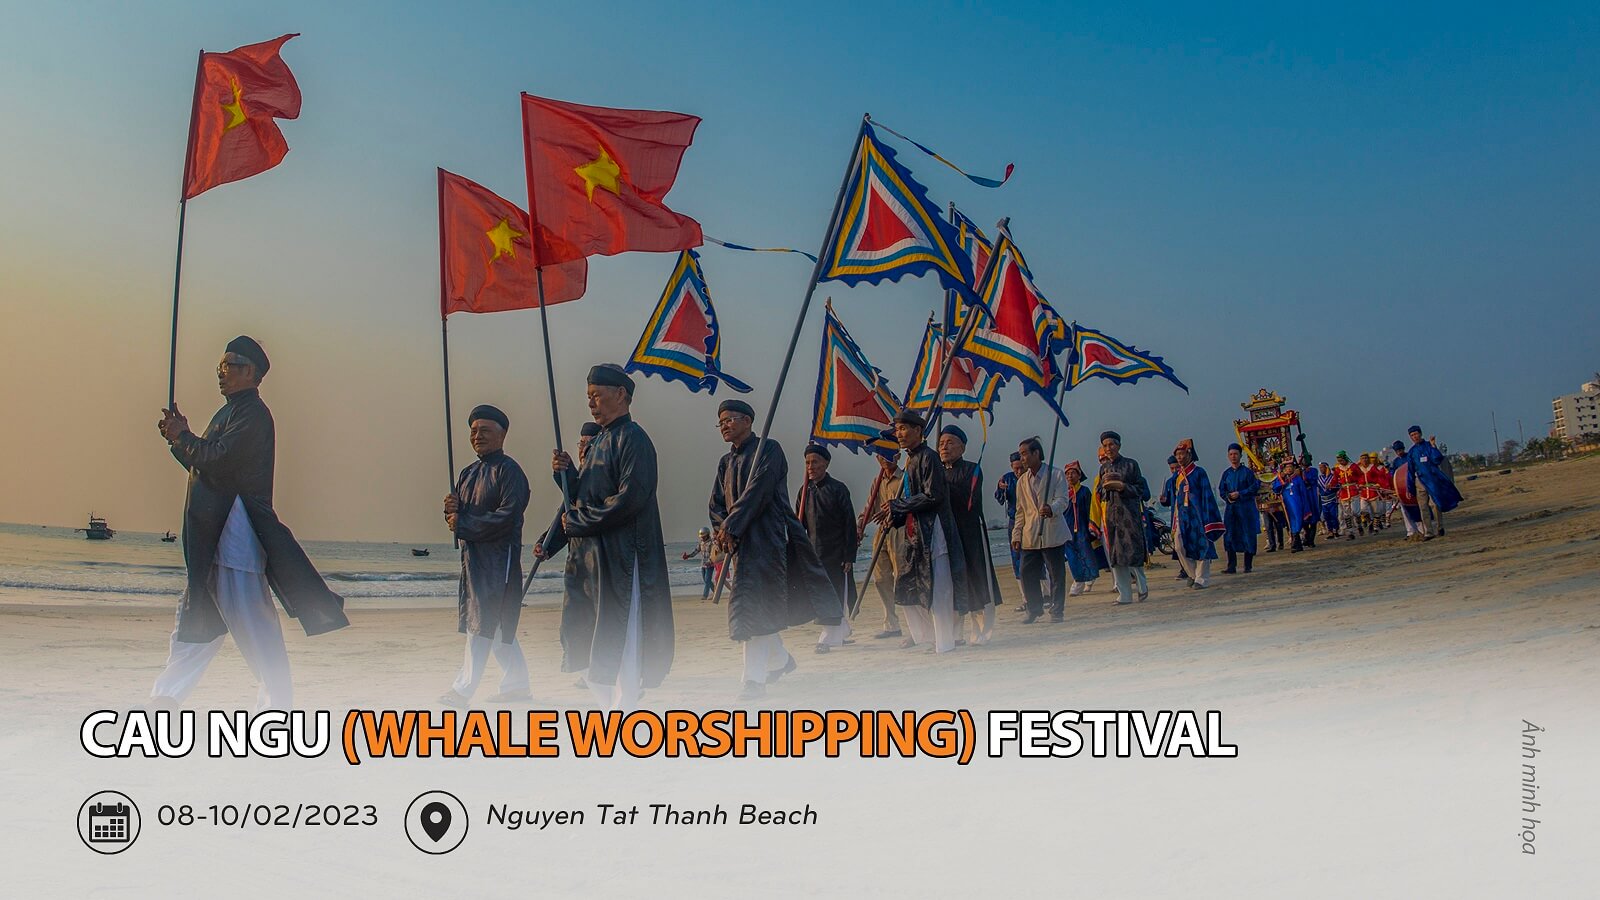 9 Cau Ngu (whale Worshipping) Festival